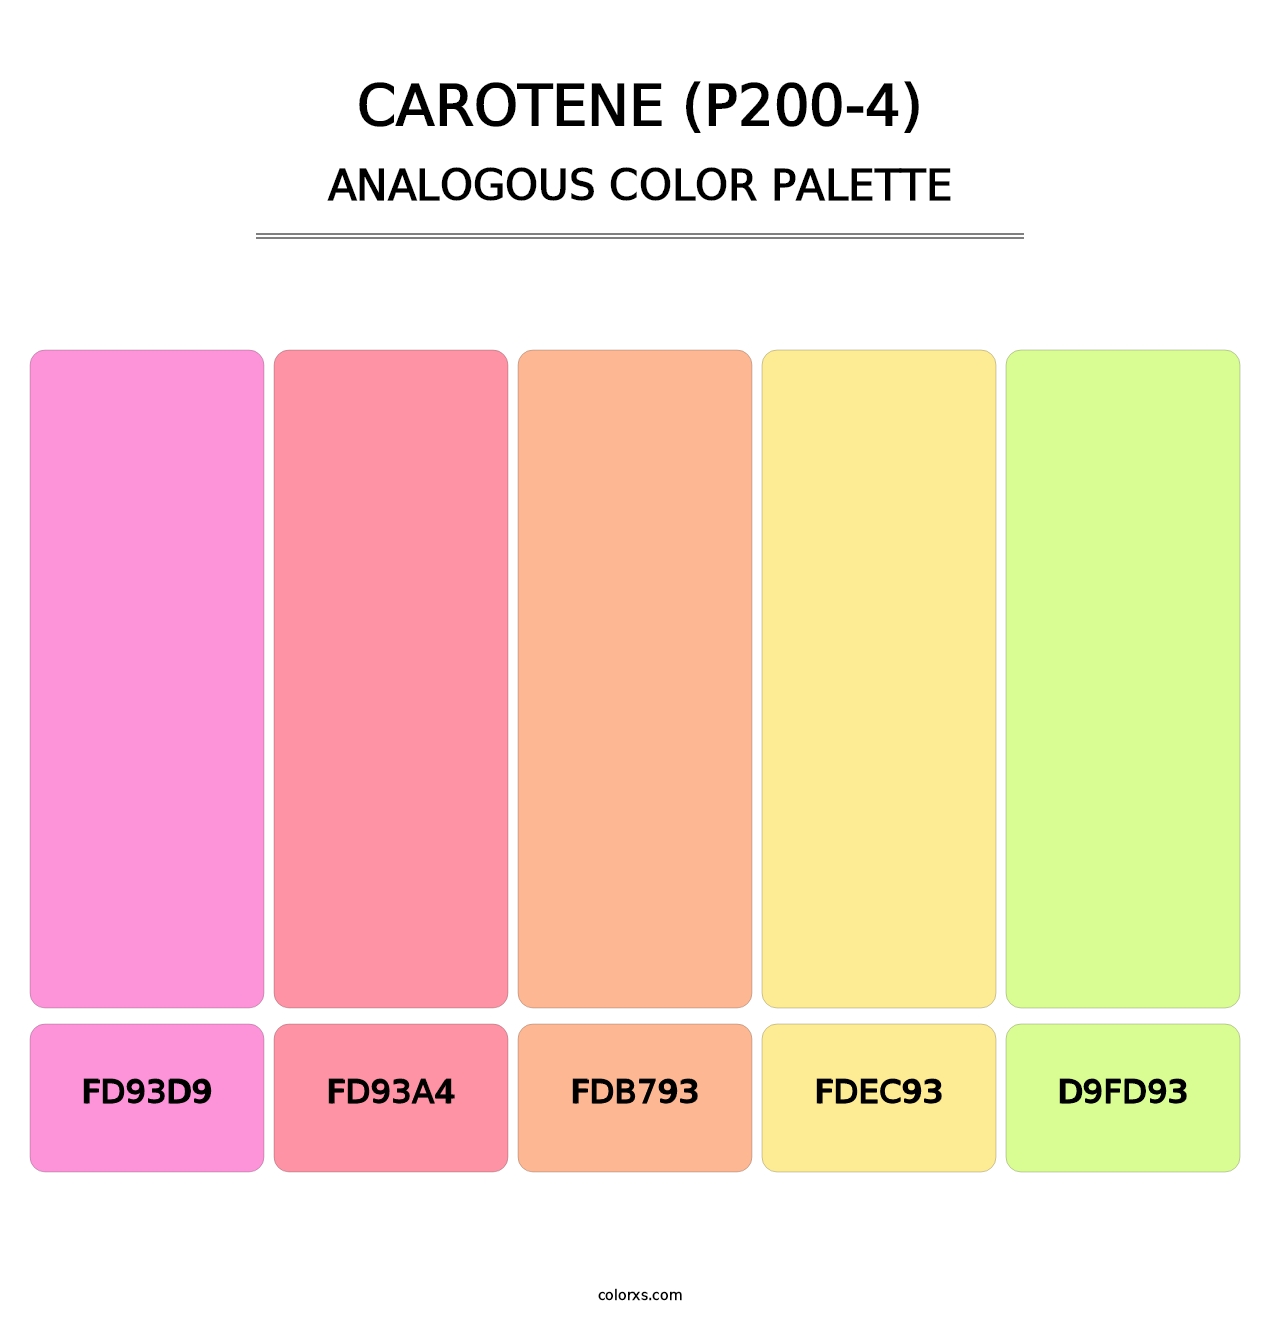 Carotene (P200-4) - Analogous Color Palette